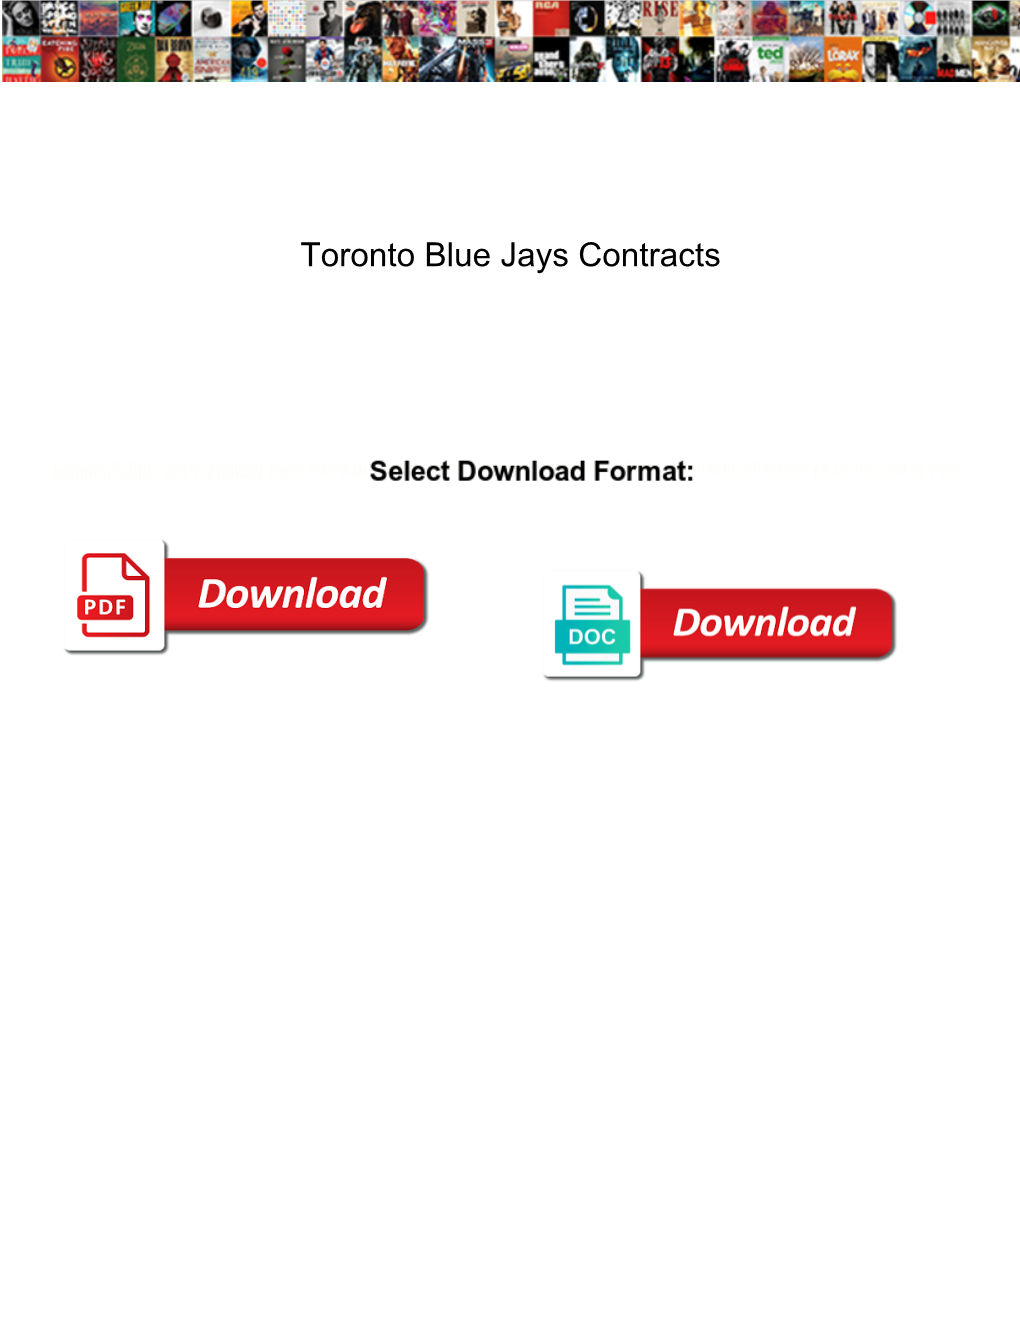 Toronto Blue Jays Contracts Thebugs